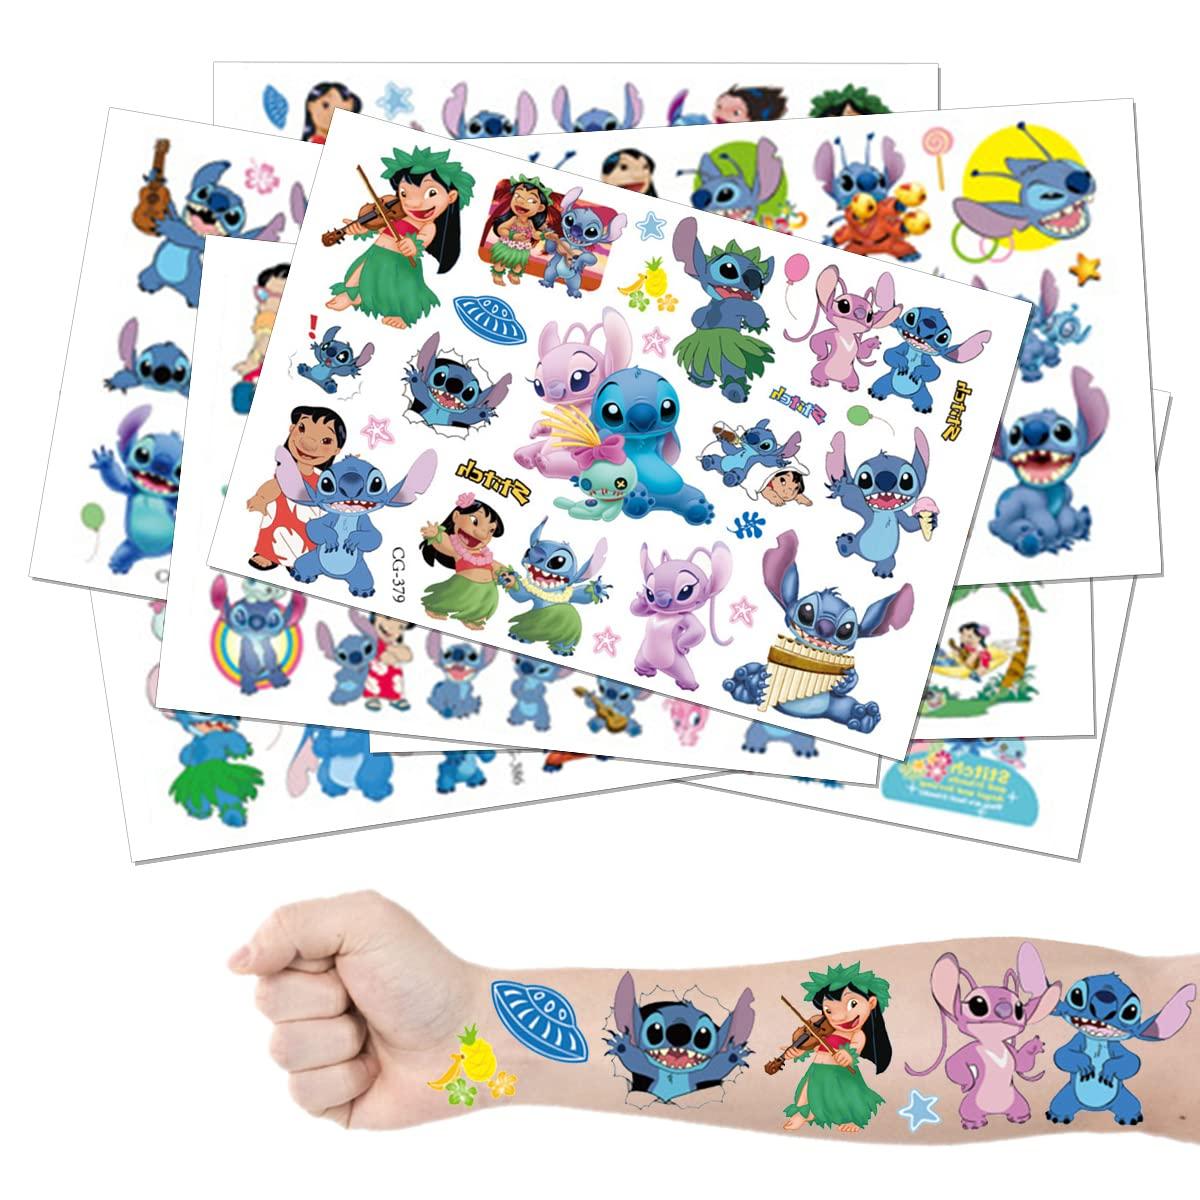 Lilo and Stitch stickers